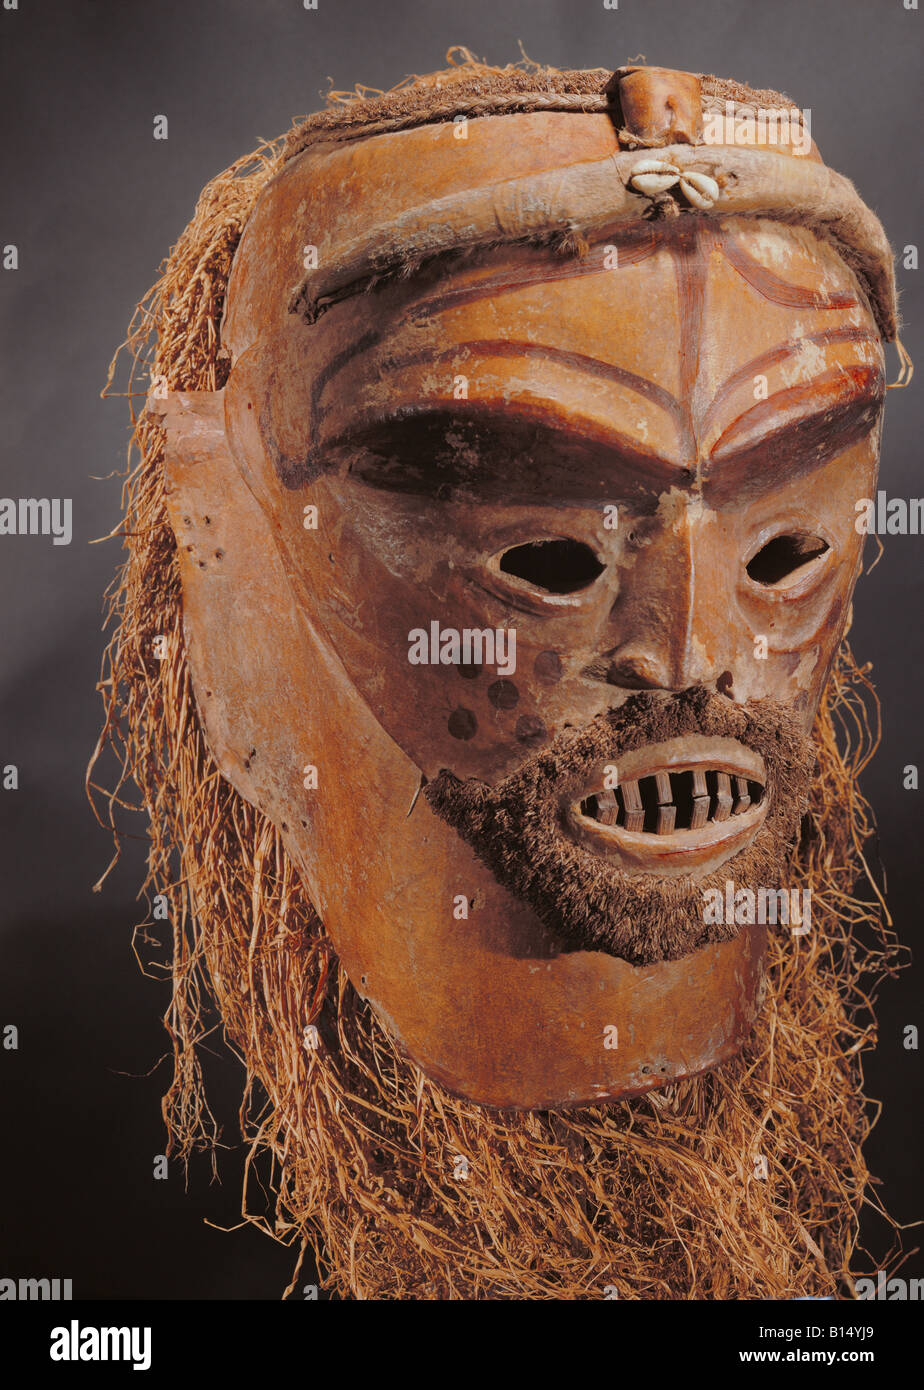 Yoruba Ekoi (Ejagham): Ekoi wooden masks are covered with animal skin.  These figures usually refer